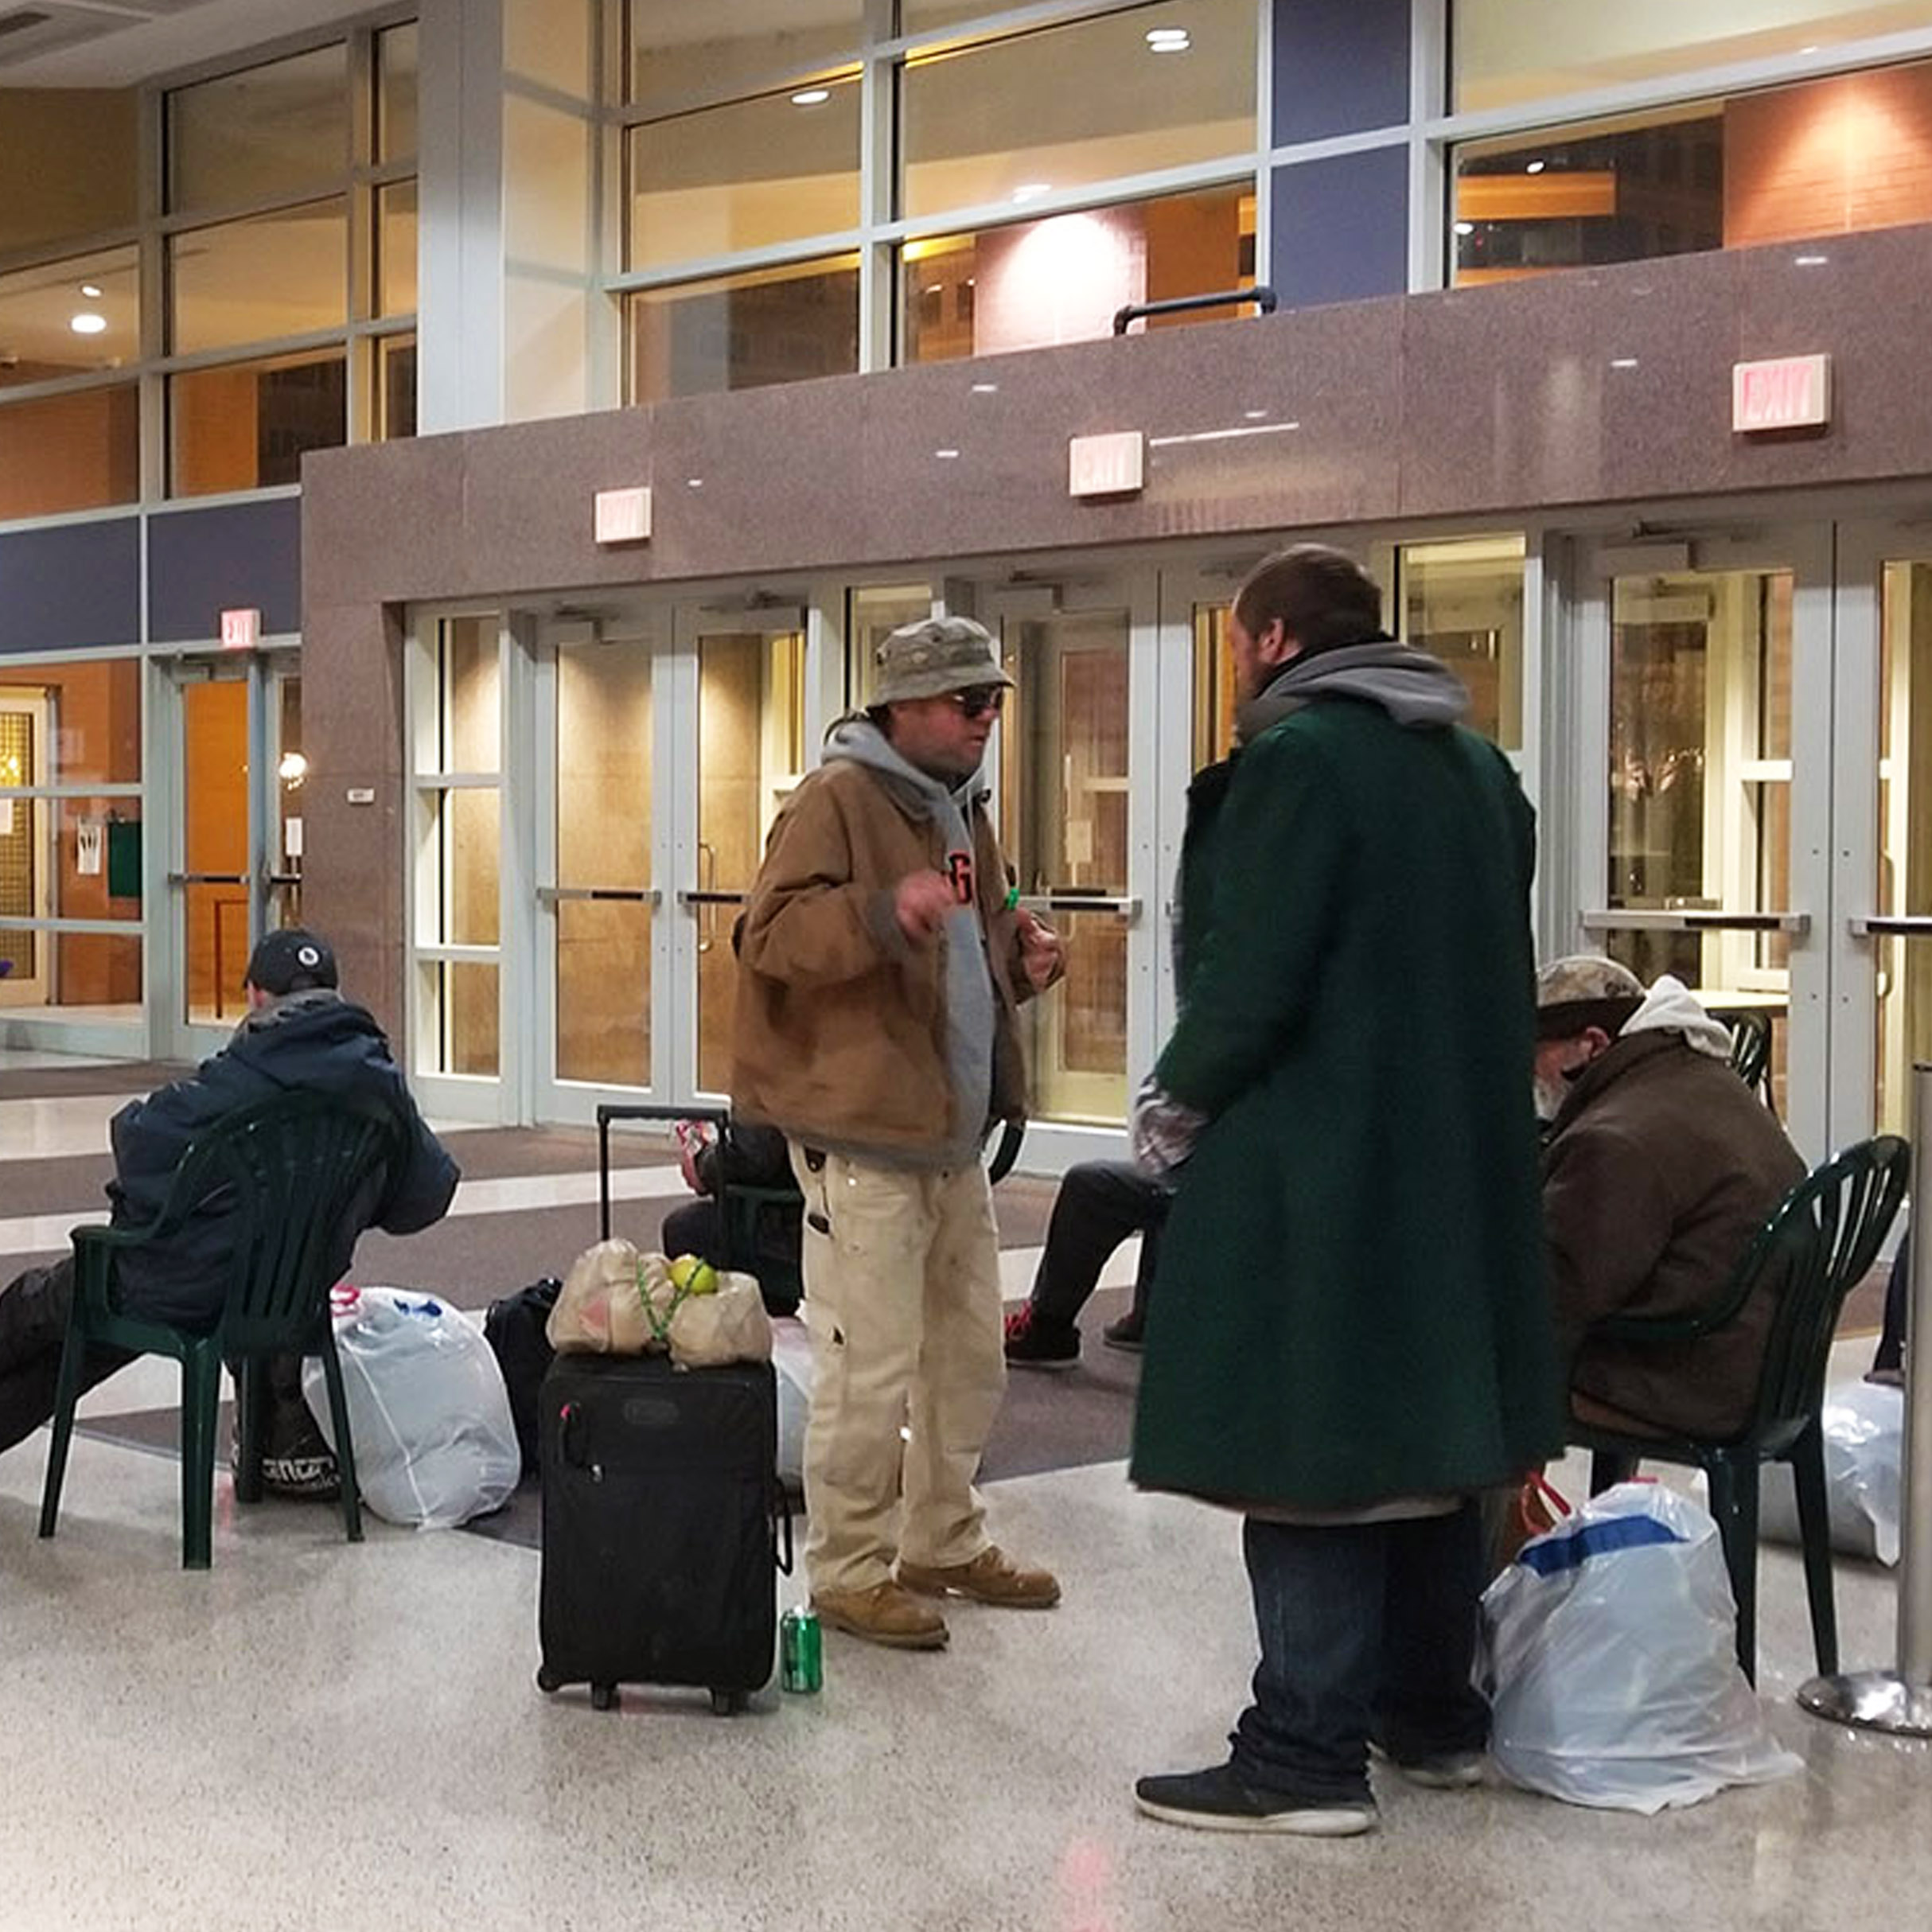 Northern Kentucky Convention Center Housing the Homeless During Coronavirus Crisis